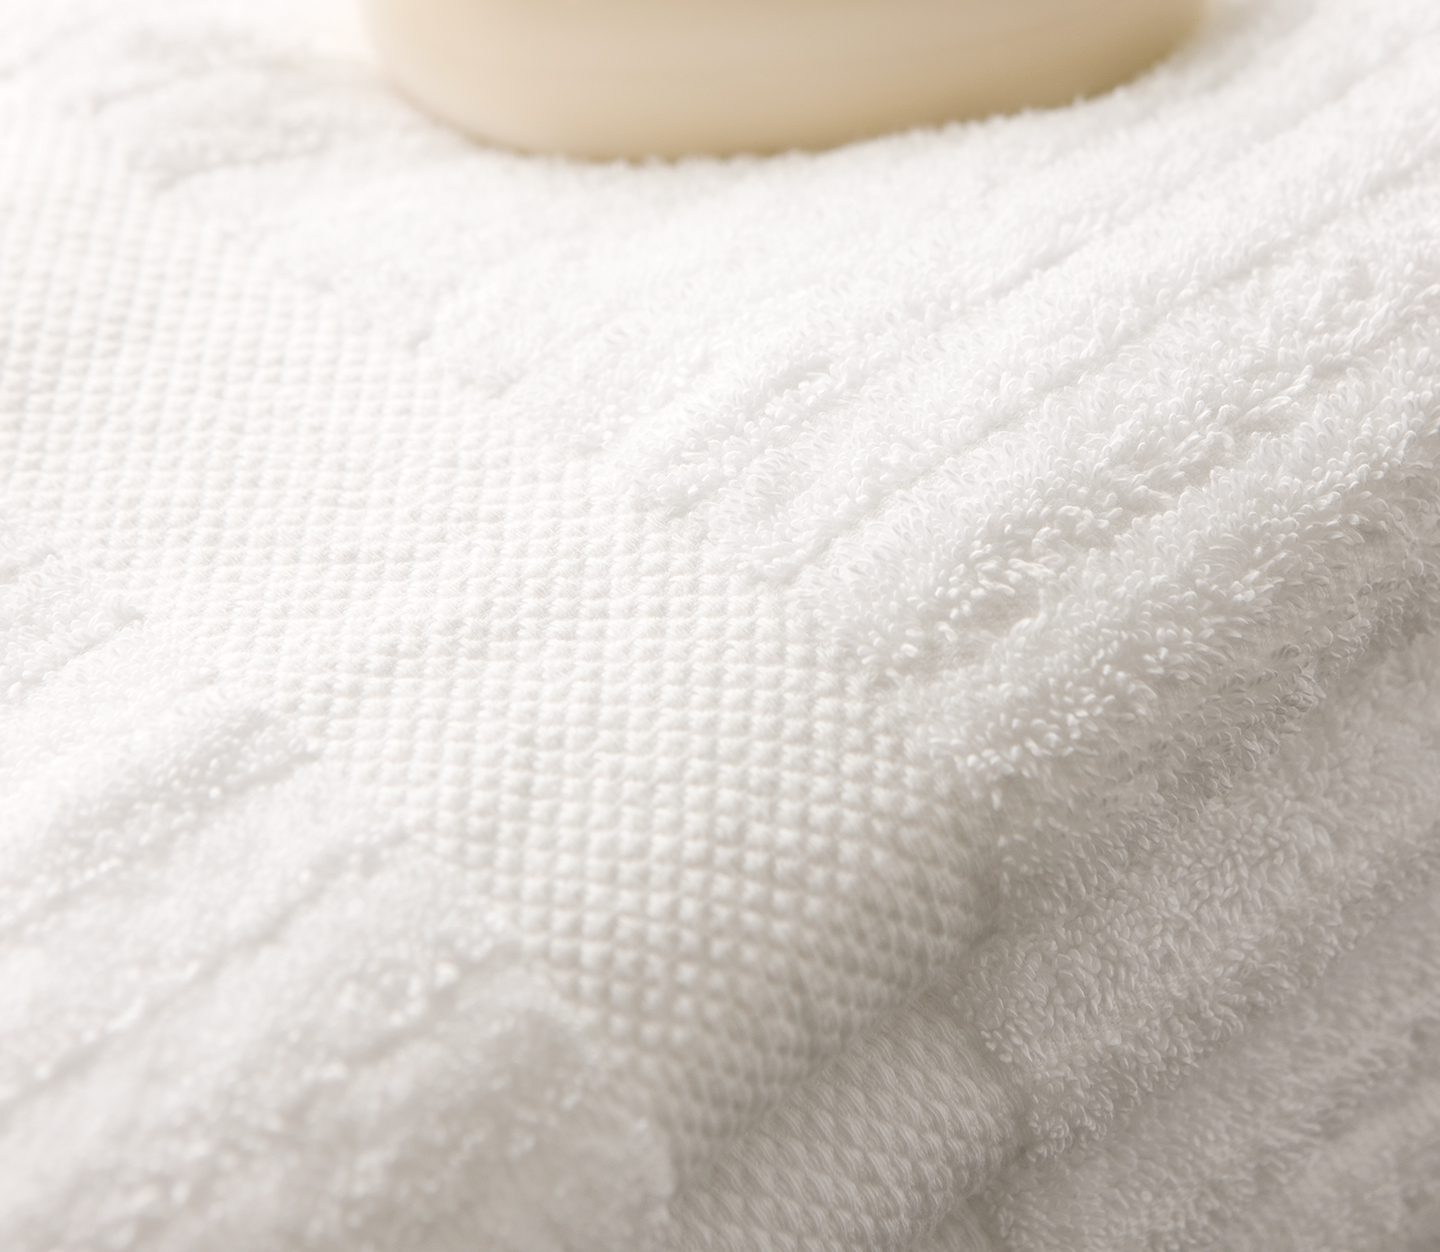 Linen bath sheet, Stonewashed linen bath towels, Thick striped linen towel